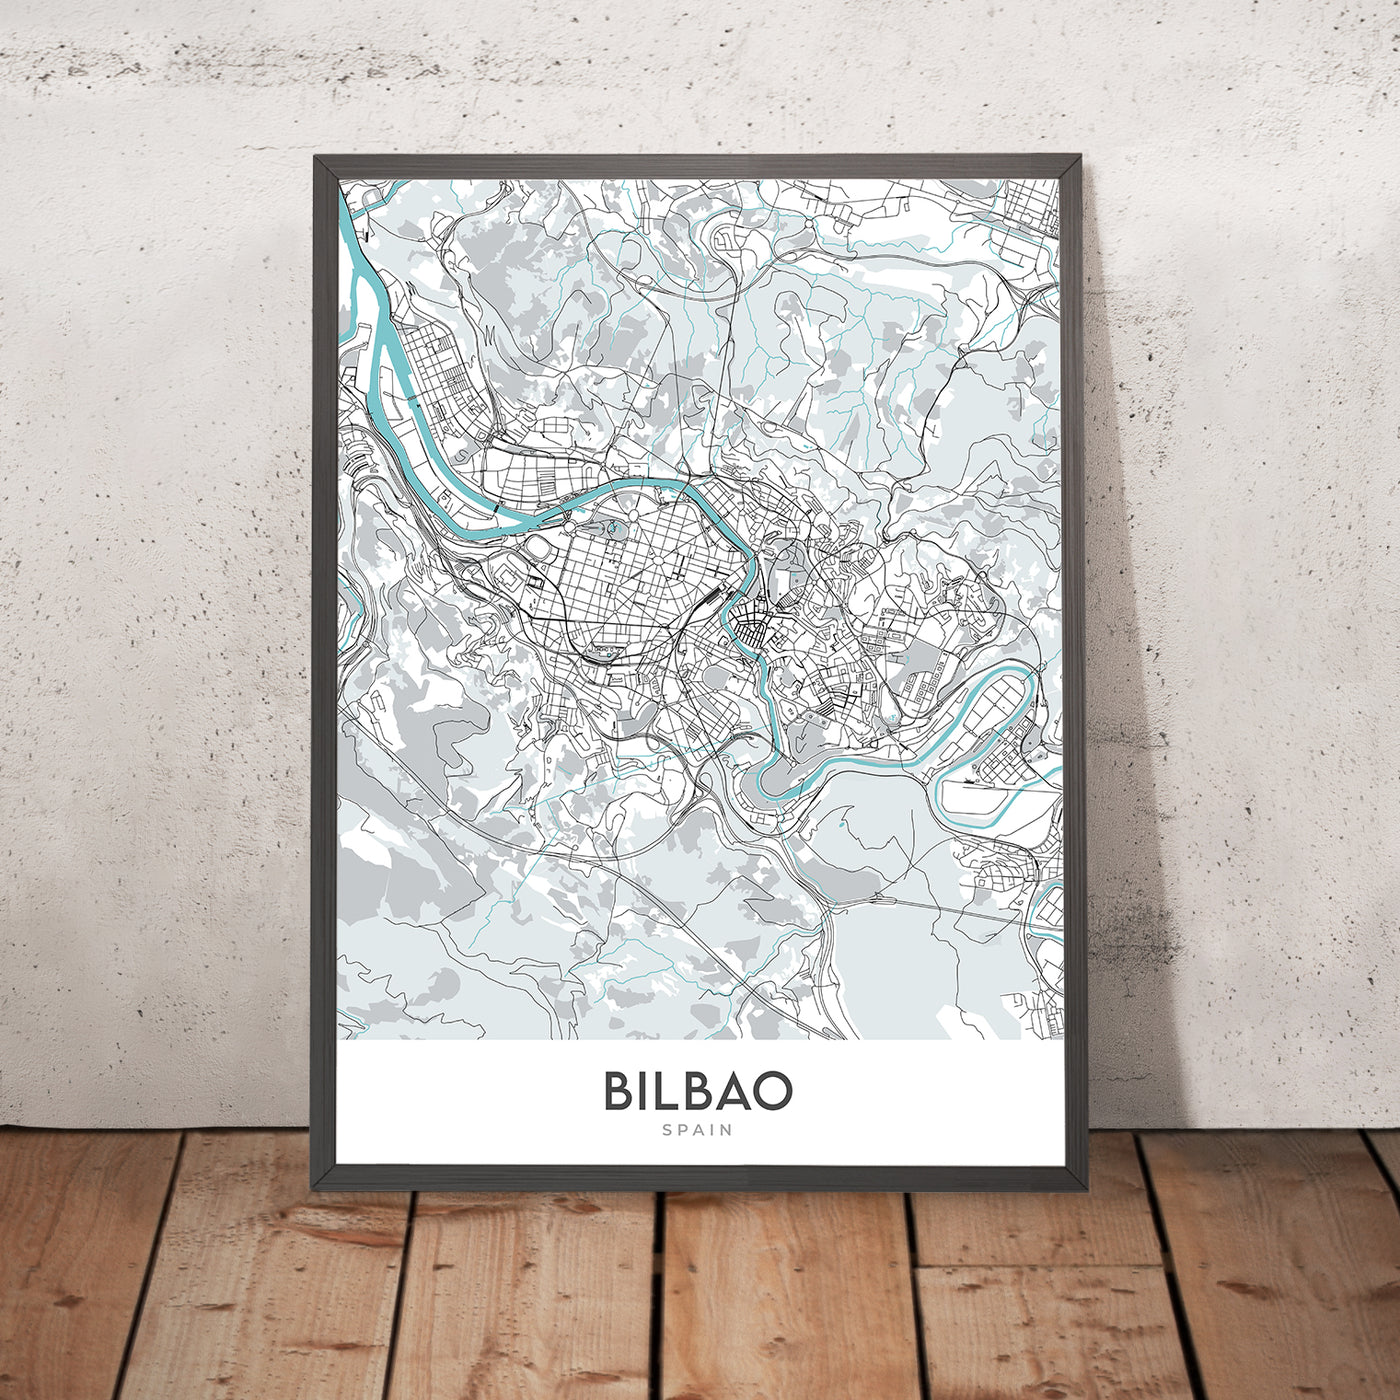 Mapa moderno de la ciudad de Bilbao, España: Guggenheim, Casco Viejo, Ensanche, Arriaga, Plaza Moyúa